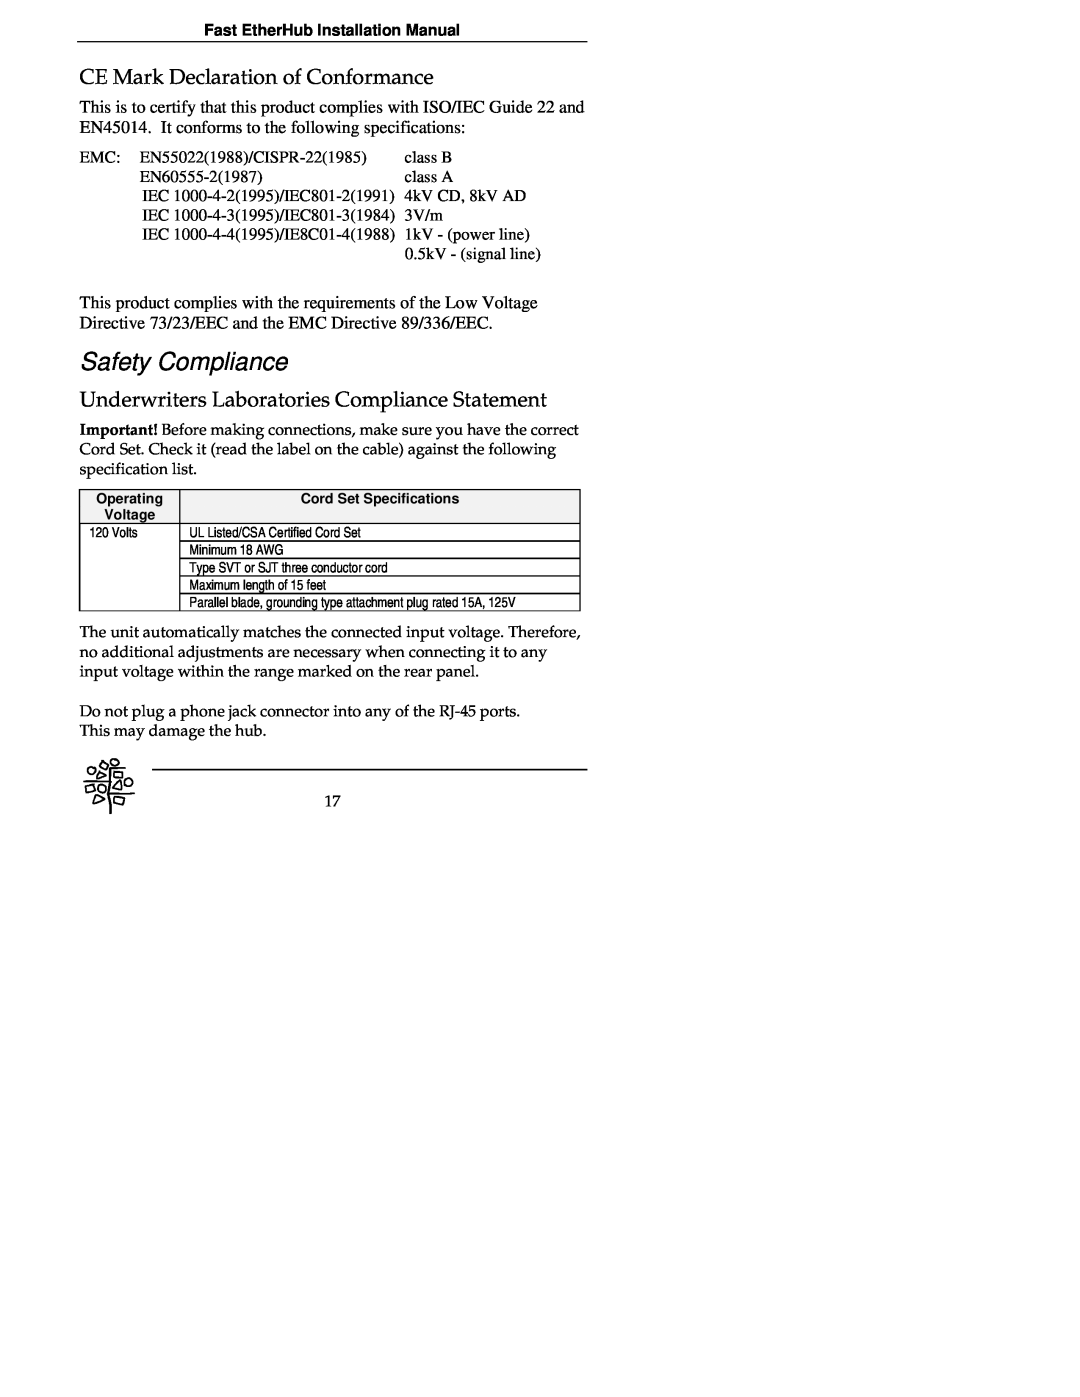 Accton Technology 12se, EH3012C, 8se, EH3008C manual Safety Compliance, CE Mark Declaration of Conformance 